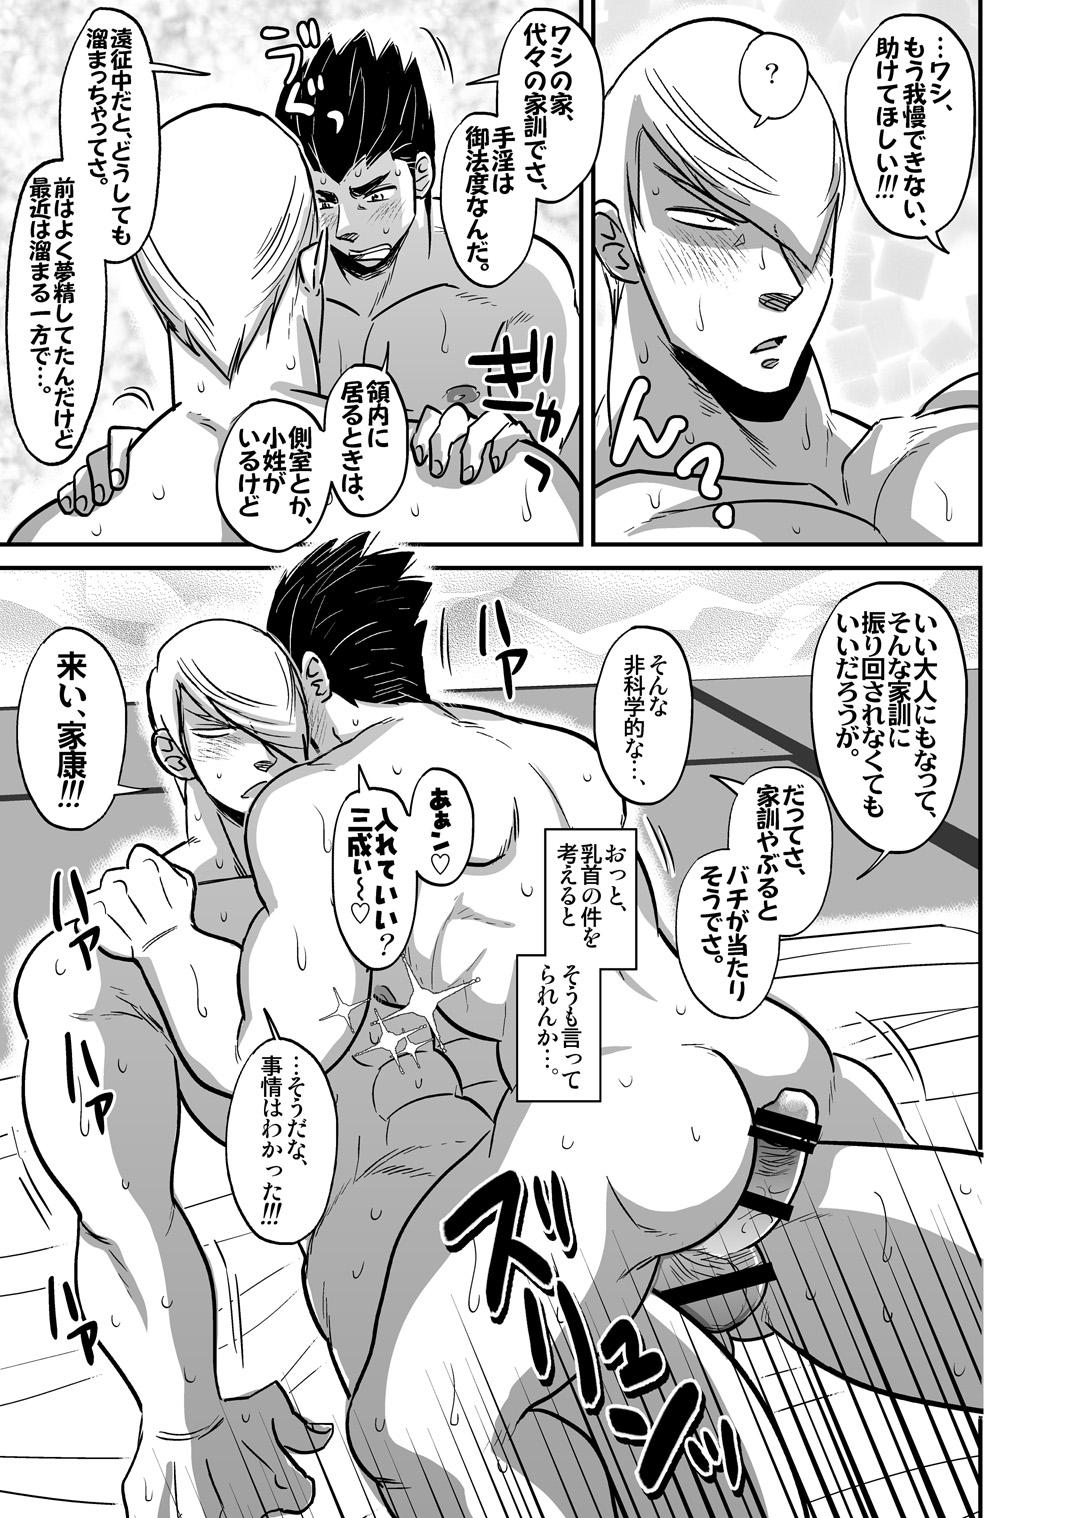 Alone Multi-HOMO manga at home - Sengoku basara Taboo - Page 10